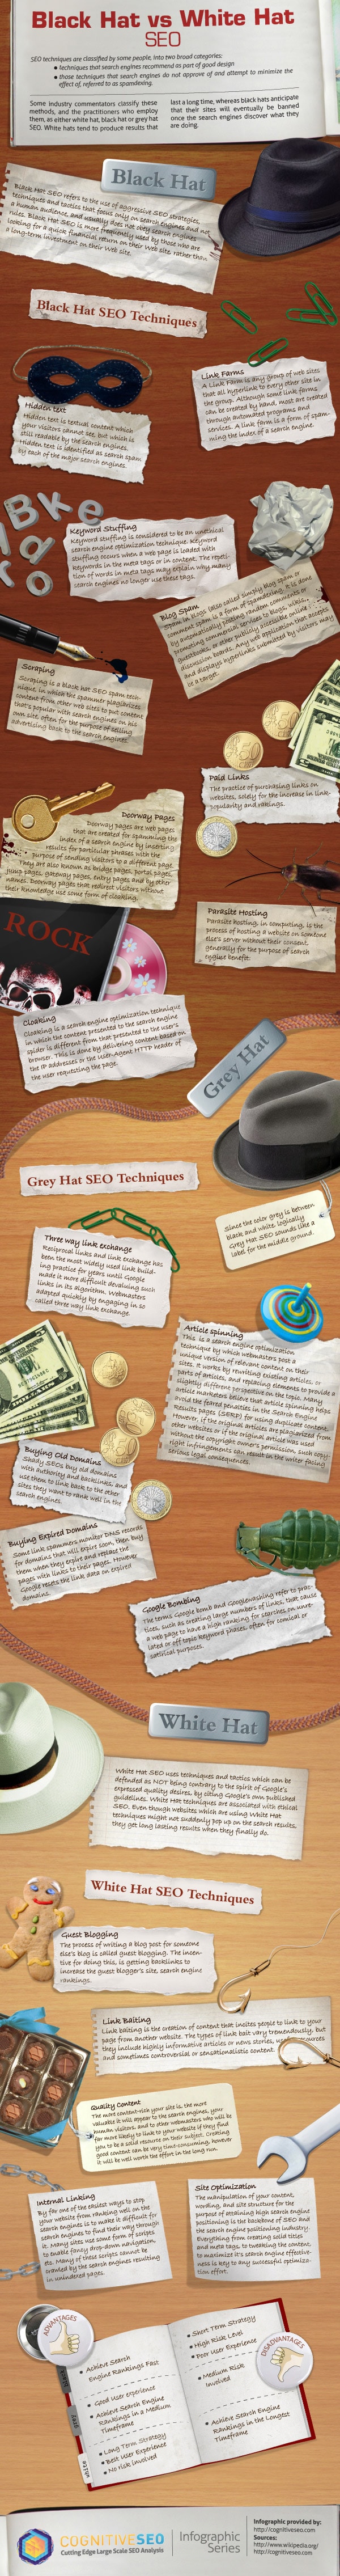 SEO Tactics: A Comparison Of Black, Grey & White Hat SEO [Infographic]